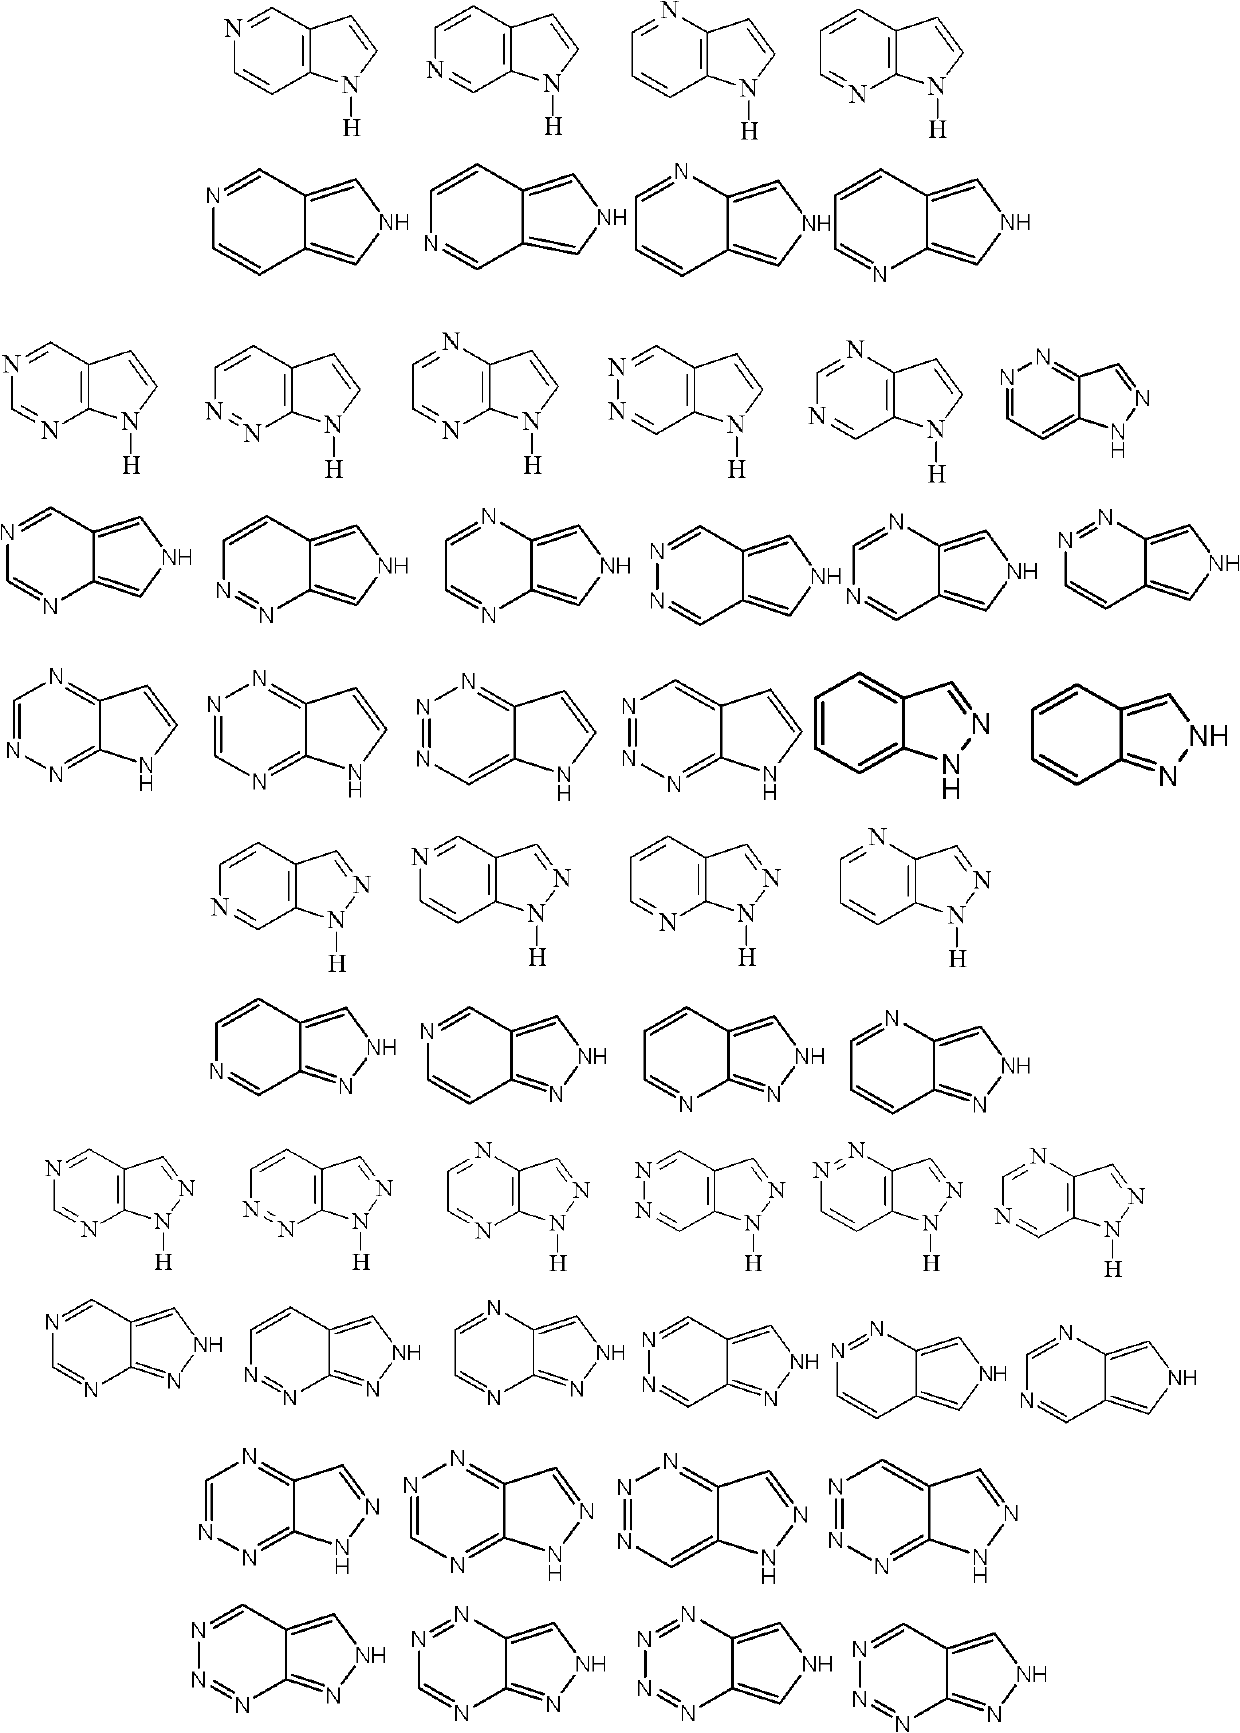 Indazole/azaindazole-based diarylcarbamide/thiocarbamide-structure antineoplastic drug